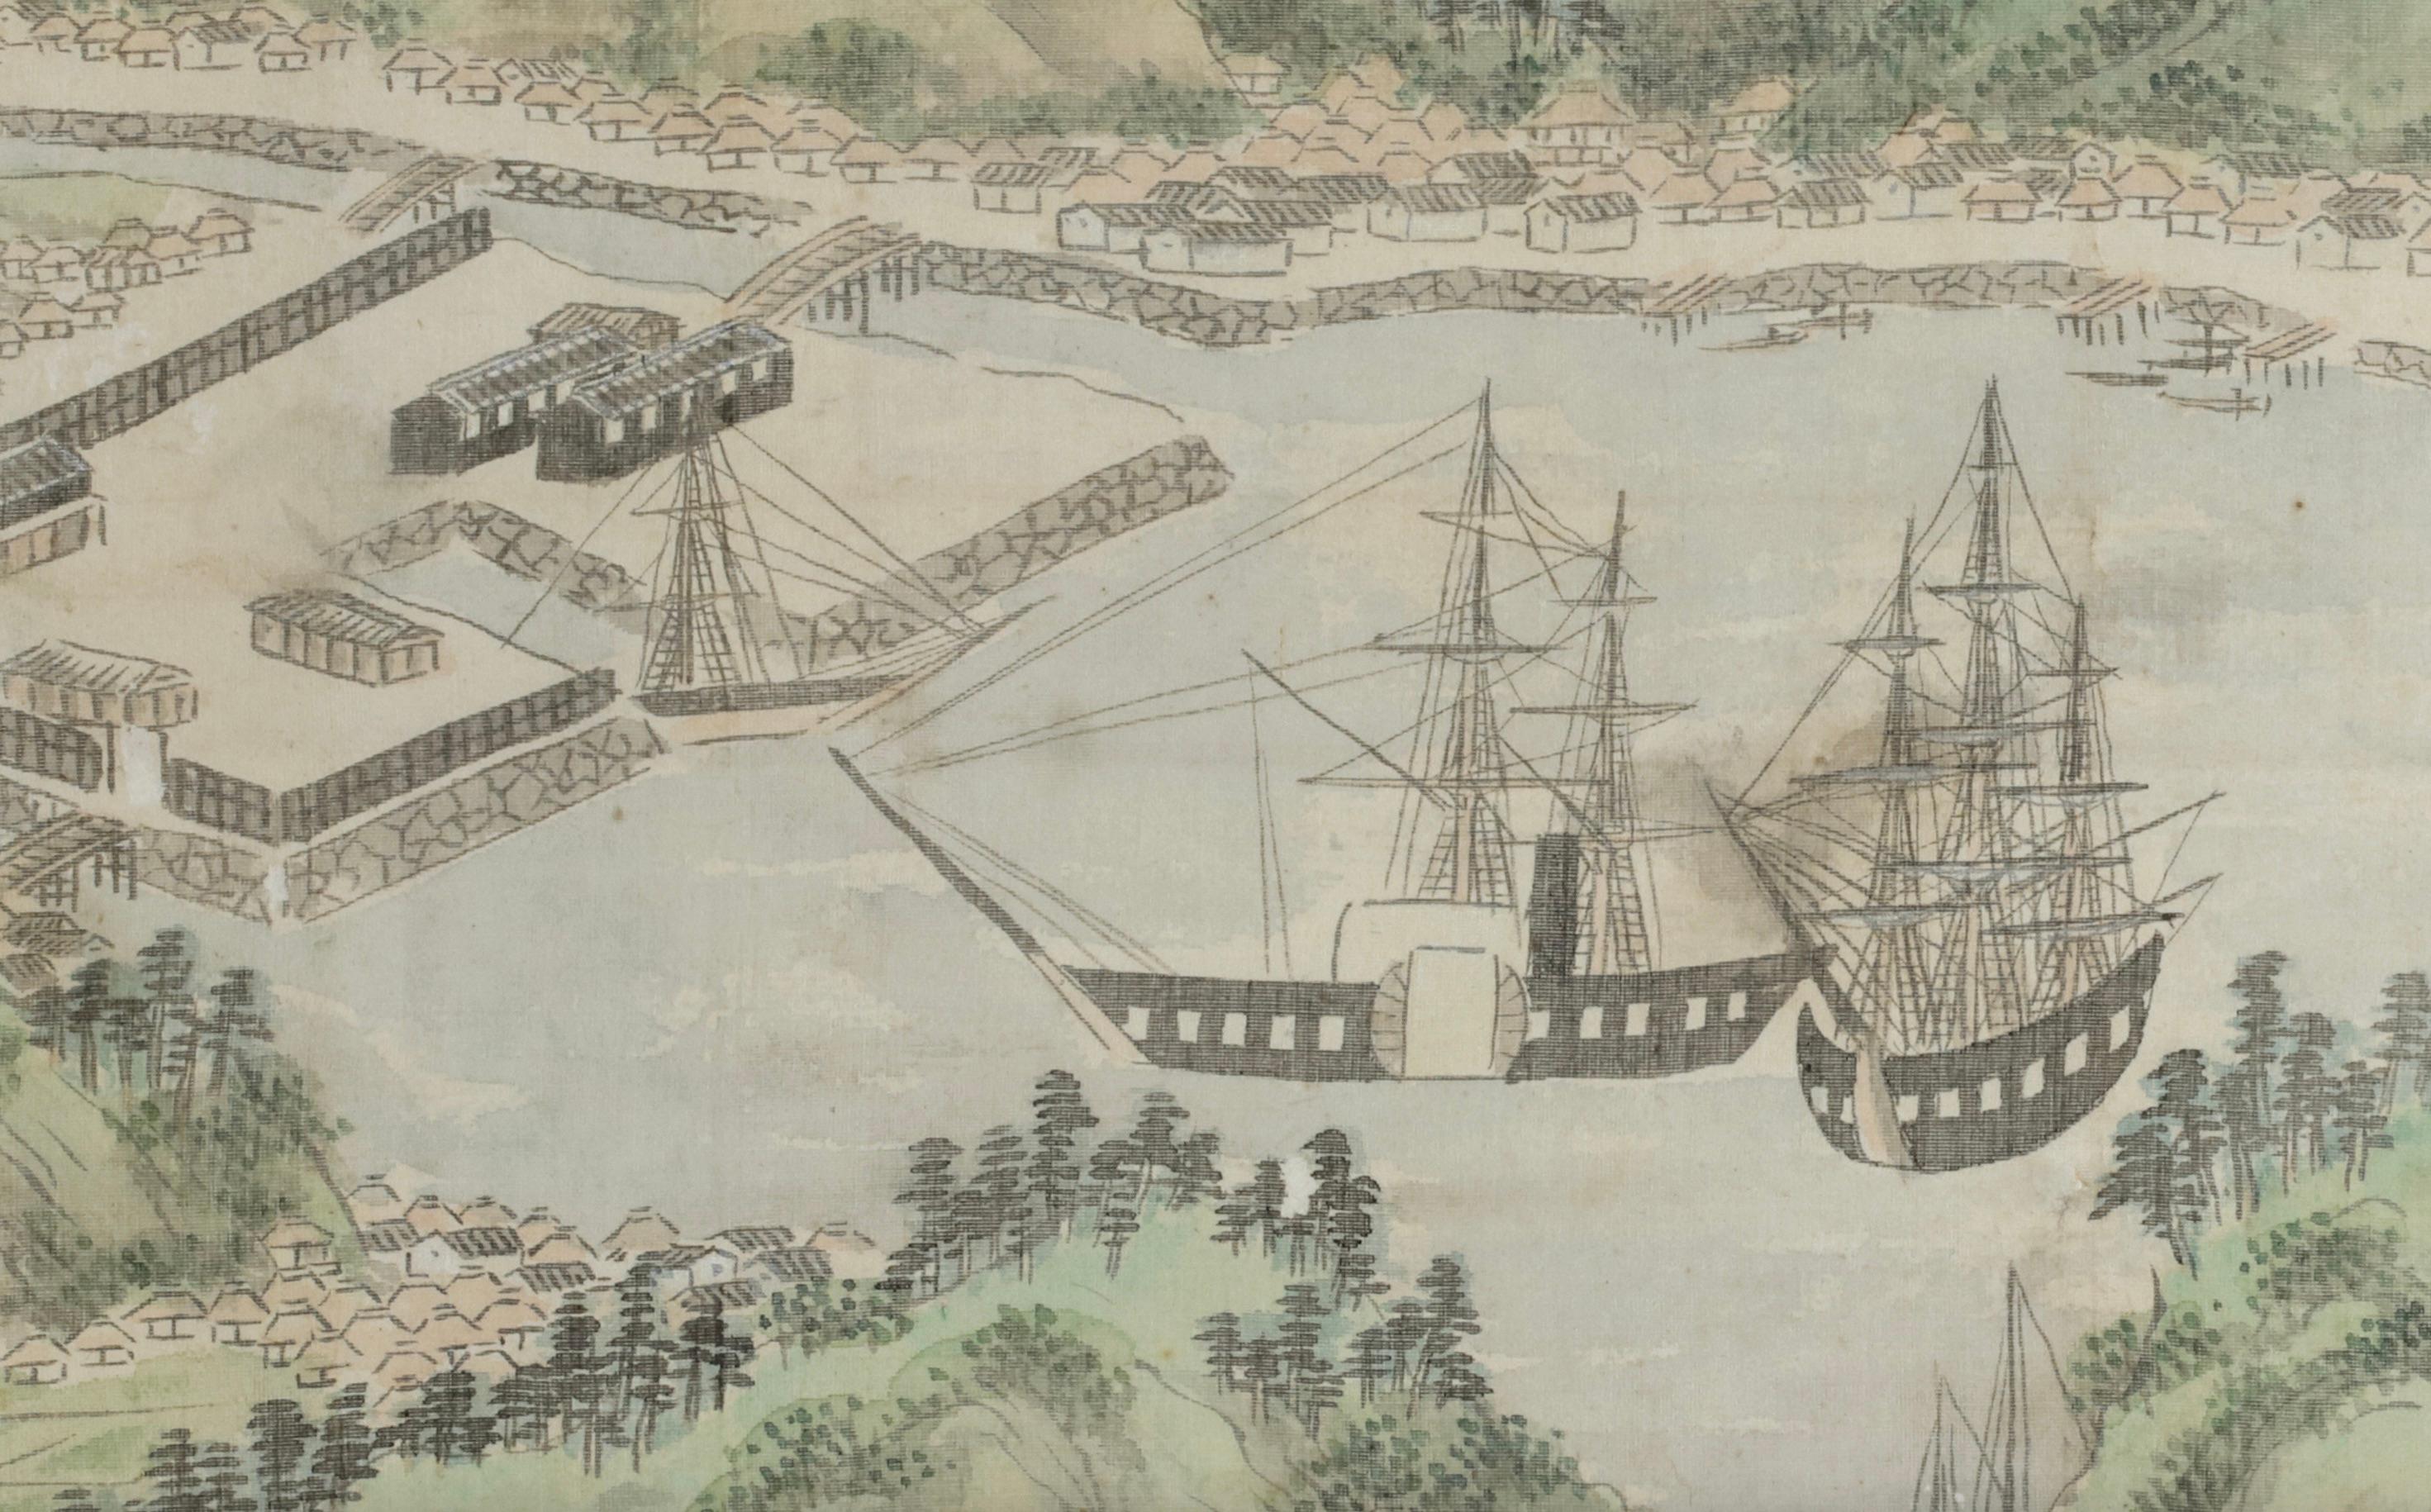 Edo Unpei Kameyama, 'a View of Black 'American' Ships in the Bay of Uraga Senminato' For Sale